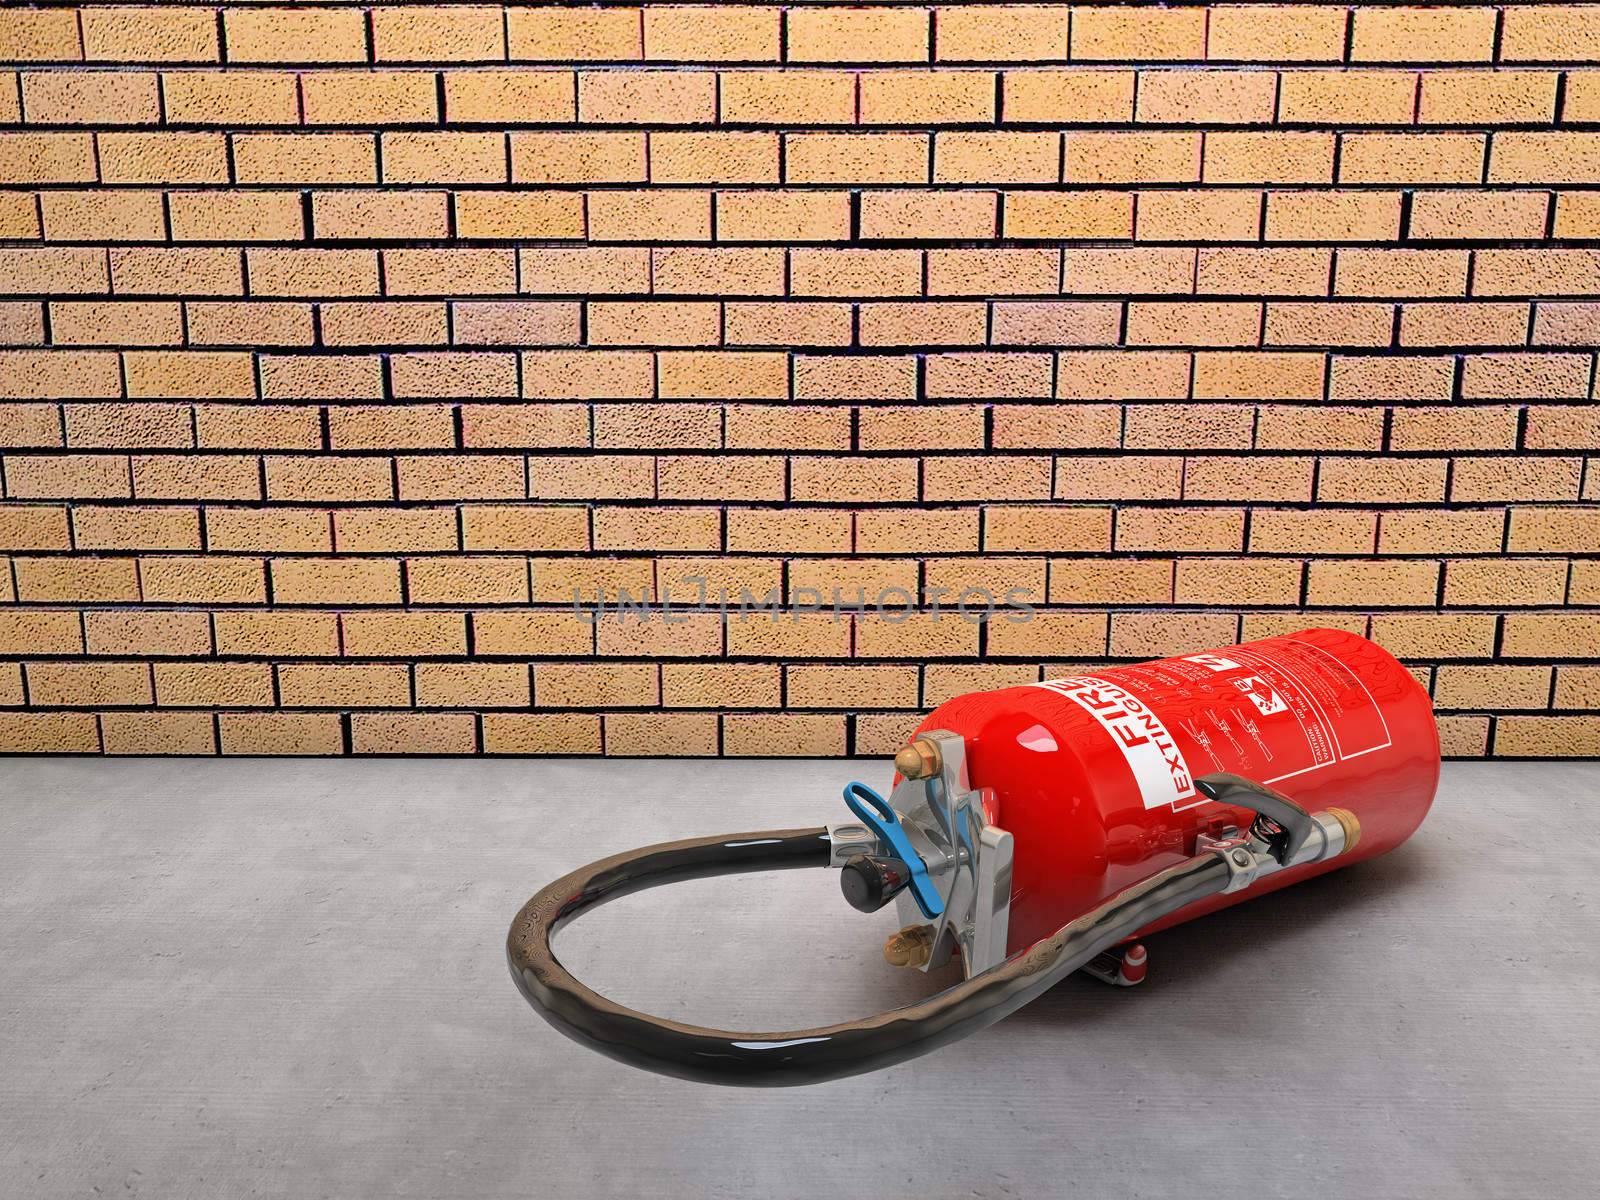 Extinguisher lying on the floor